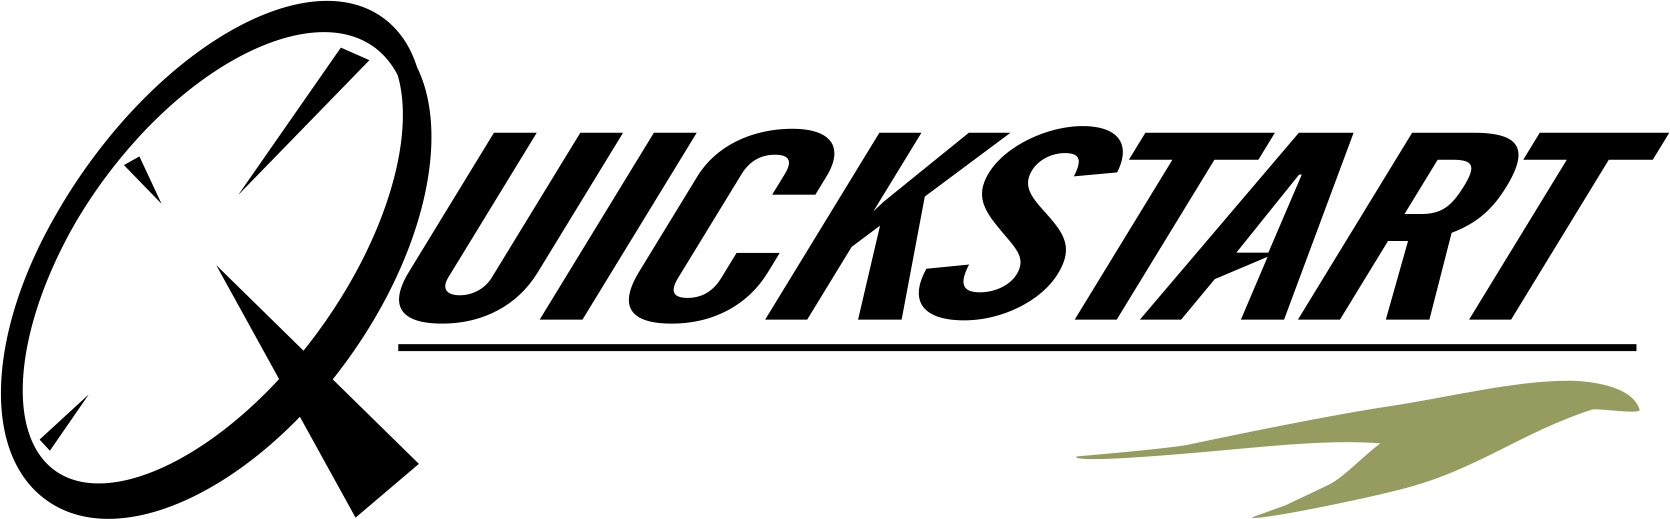 Quick Start logo